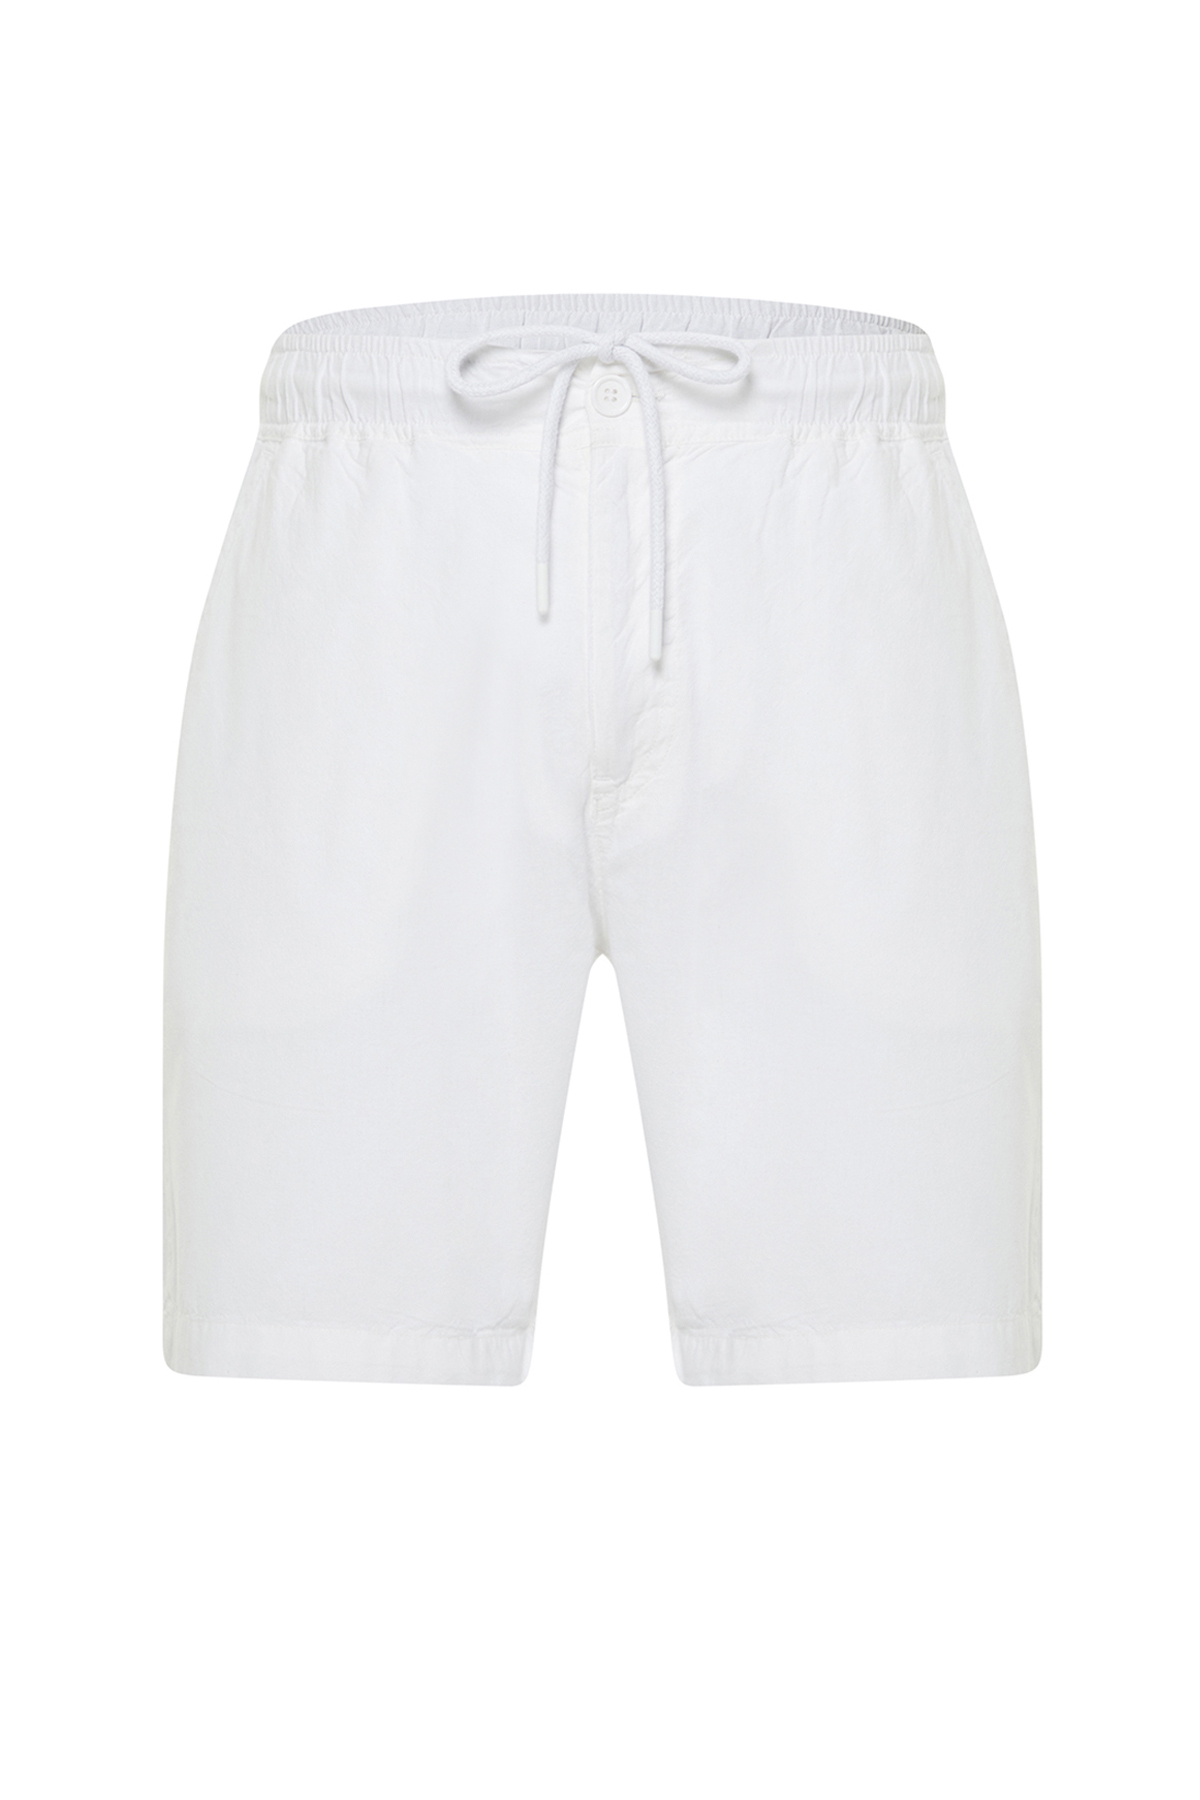 Trendyol Men's White Loose Fit Shorts